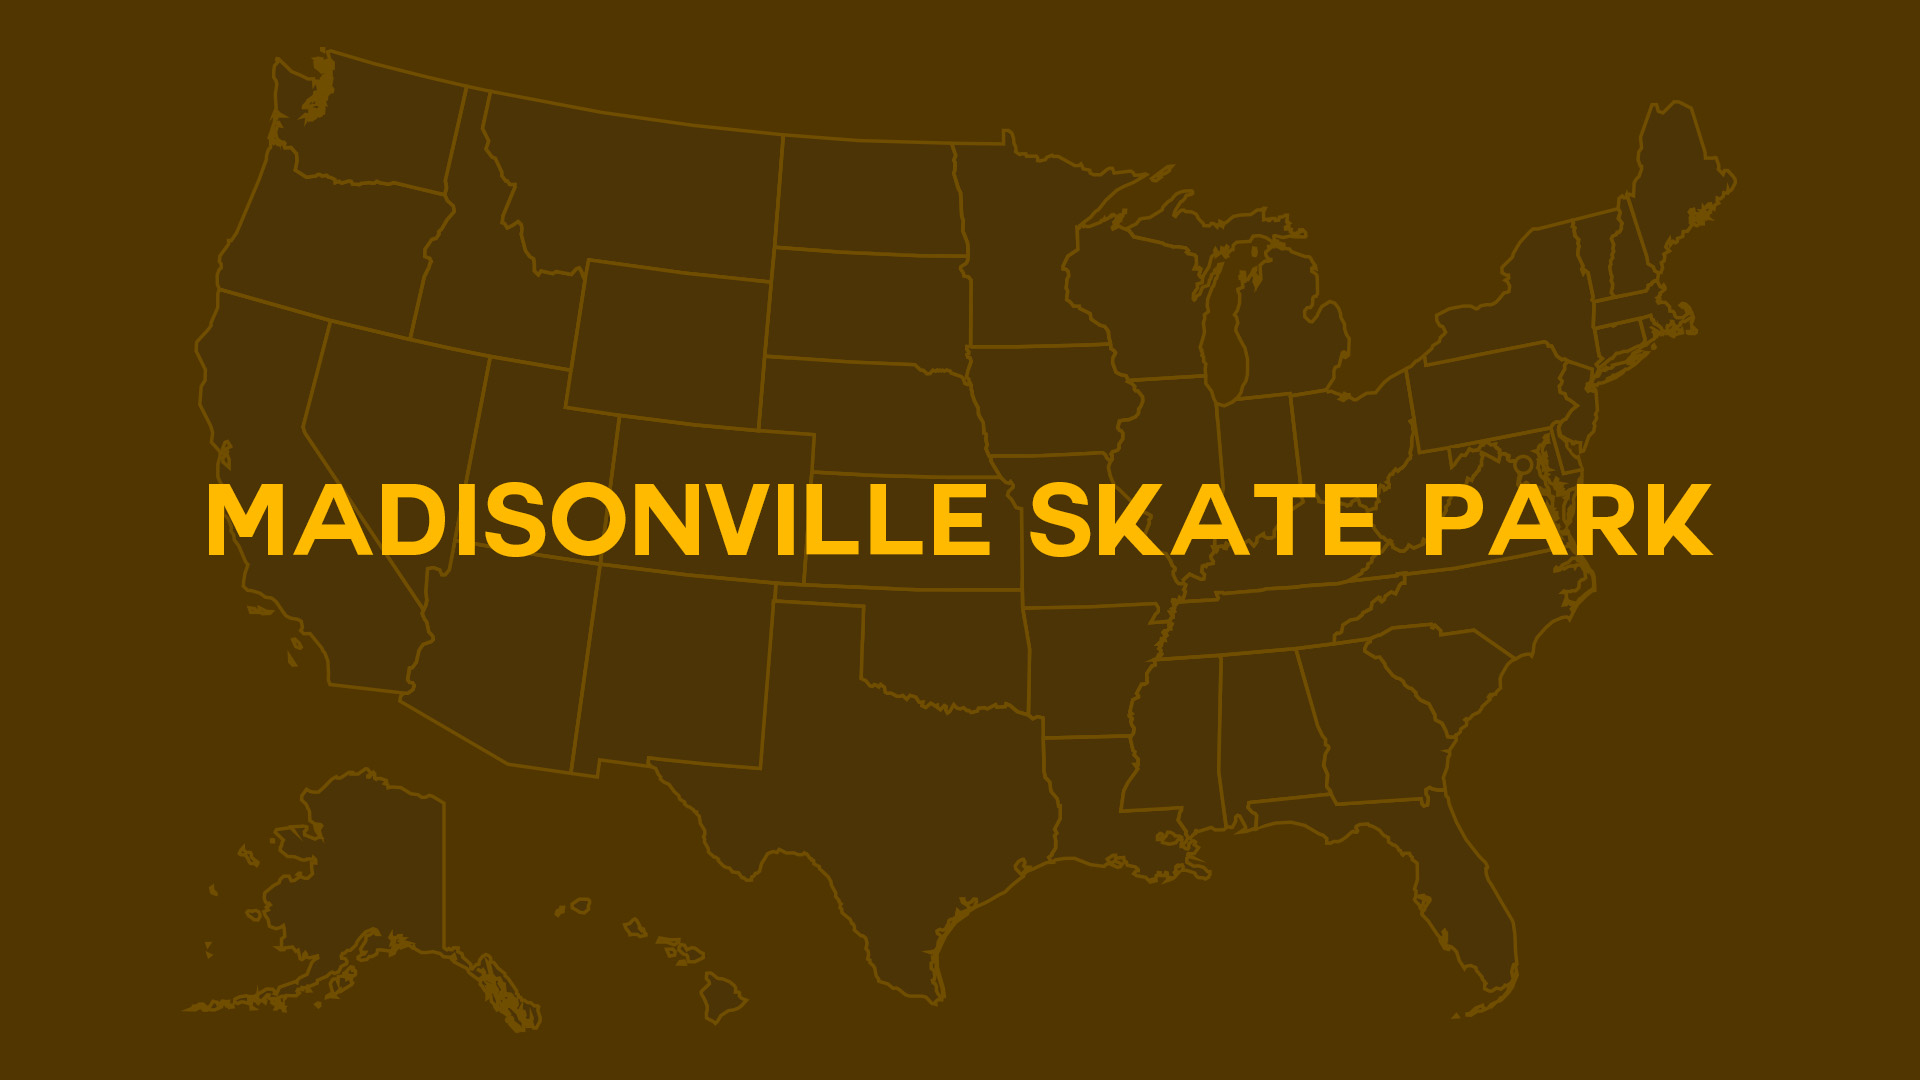 Title card for Madisonville Skate Park